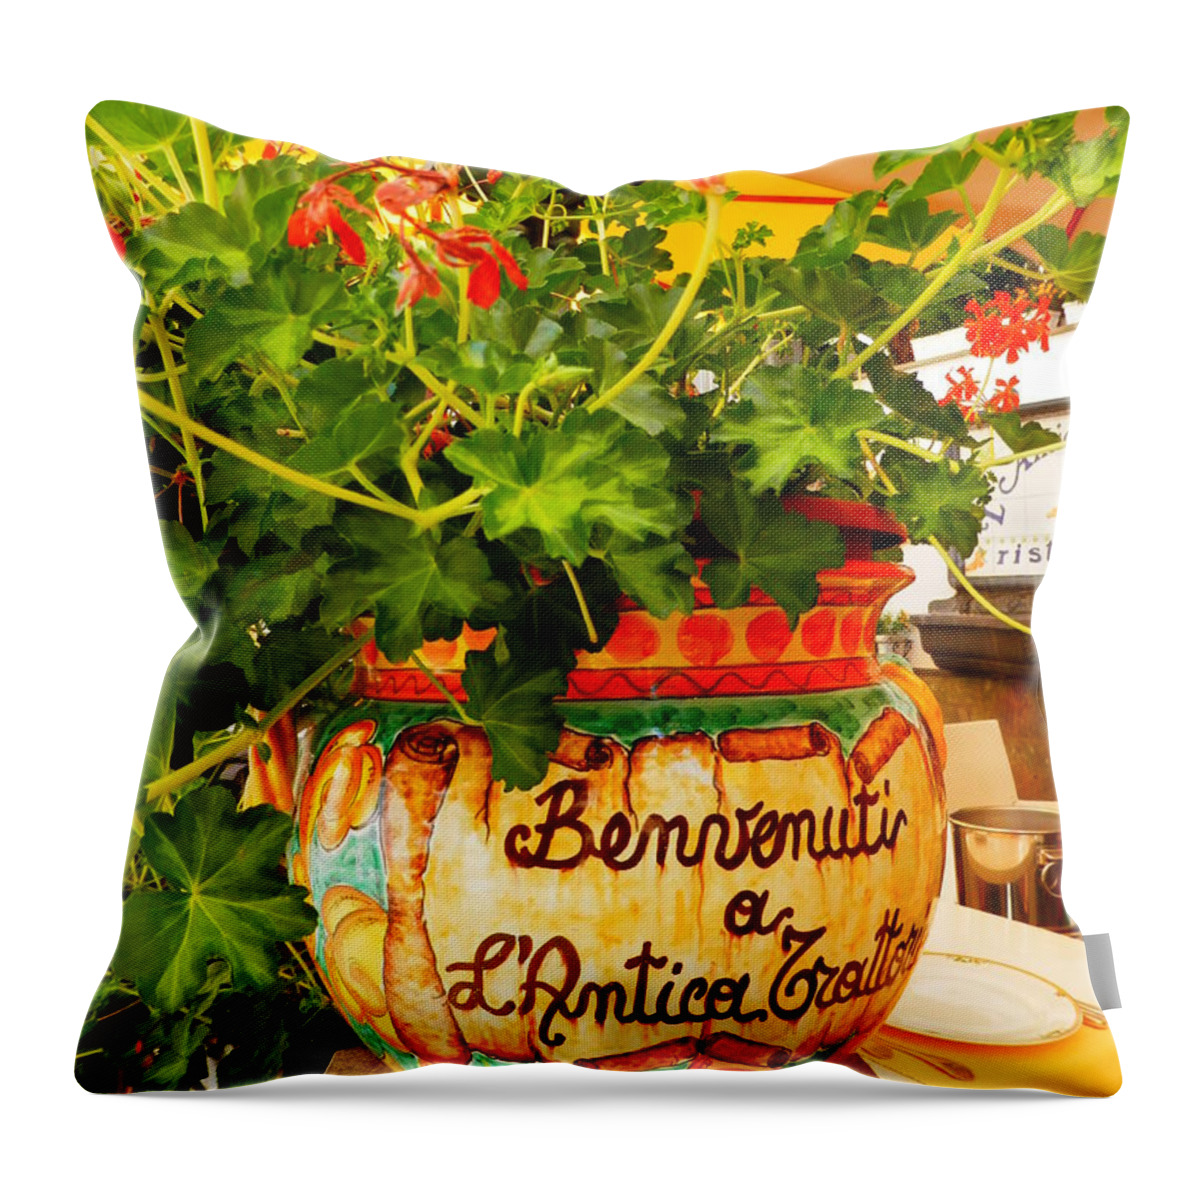 Geranium Throw Pillow featuring the photograph Geranium Planter by Pema Hou